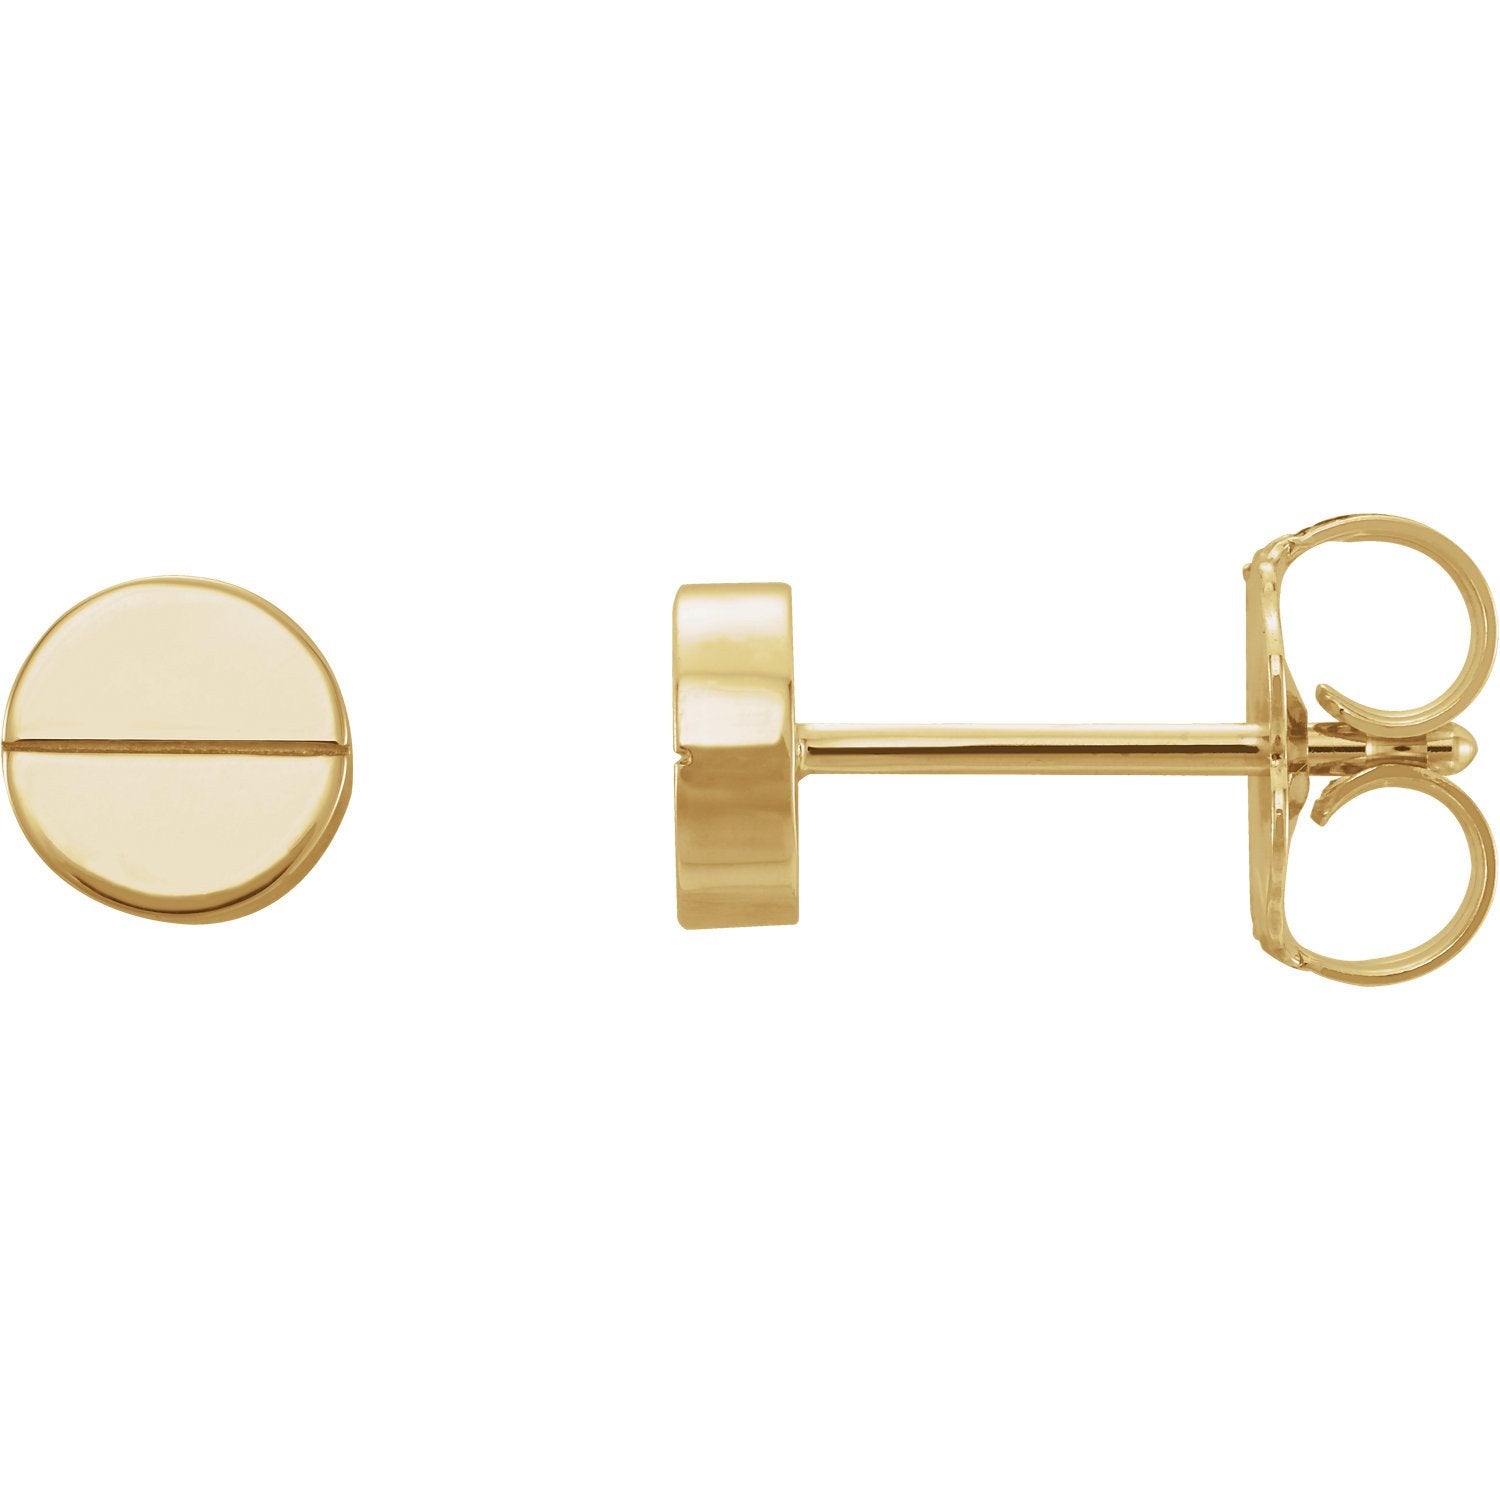 Geometric Earrings with Backs - 14K Yellow Gold